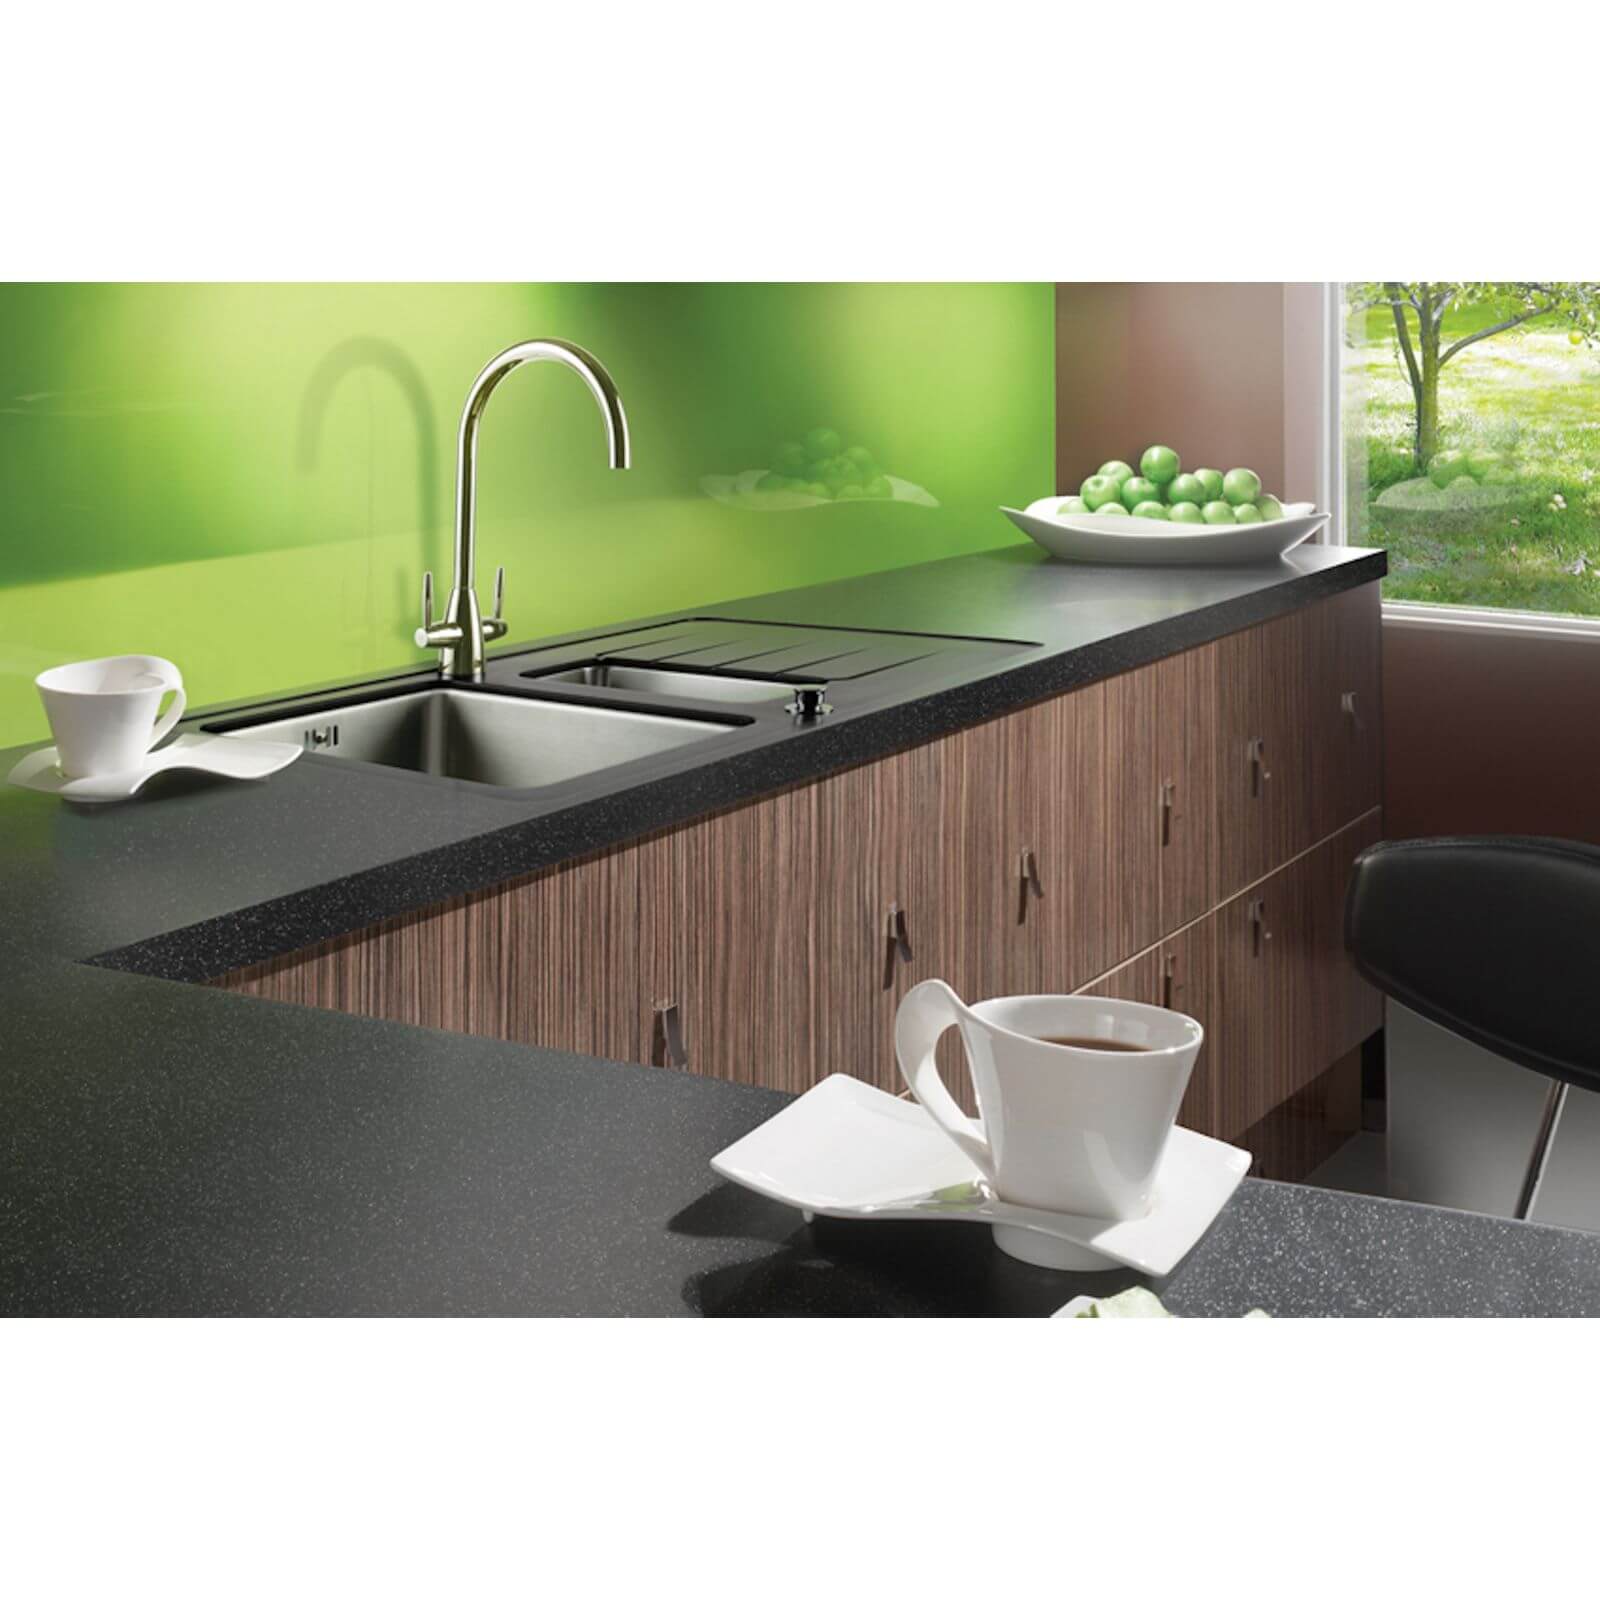 Maia Galaxy Kitchen Sink Worktop - Acrylic Super Large Left Hand Bowl - 1800 x 650 x 28mm